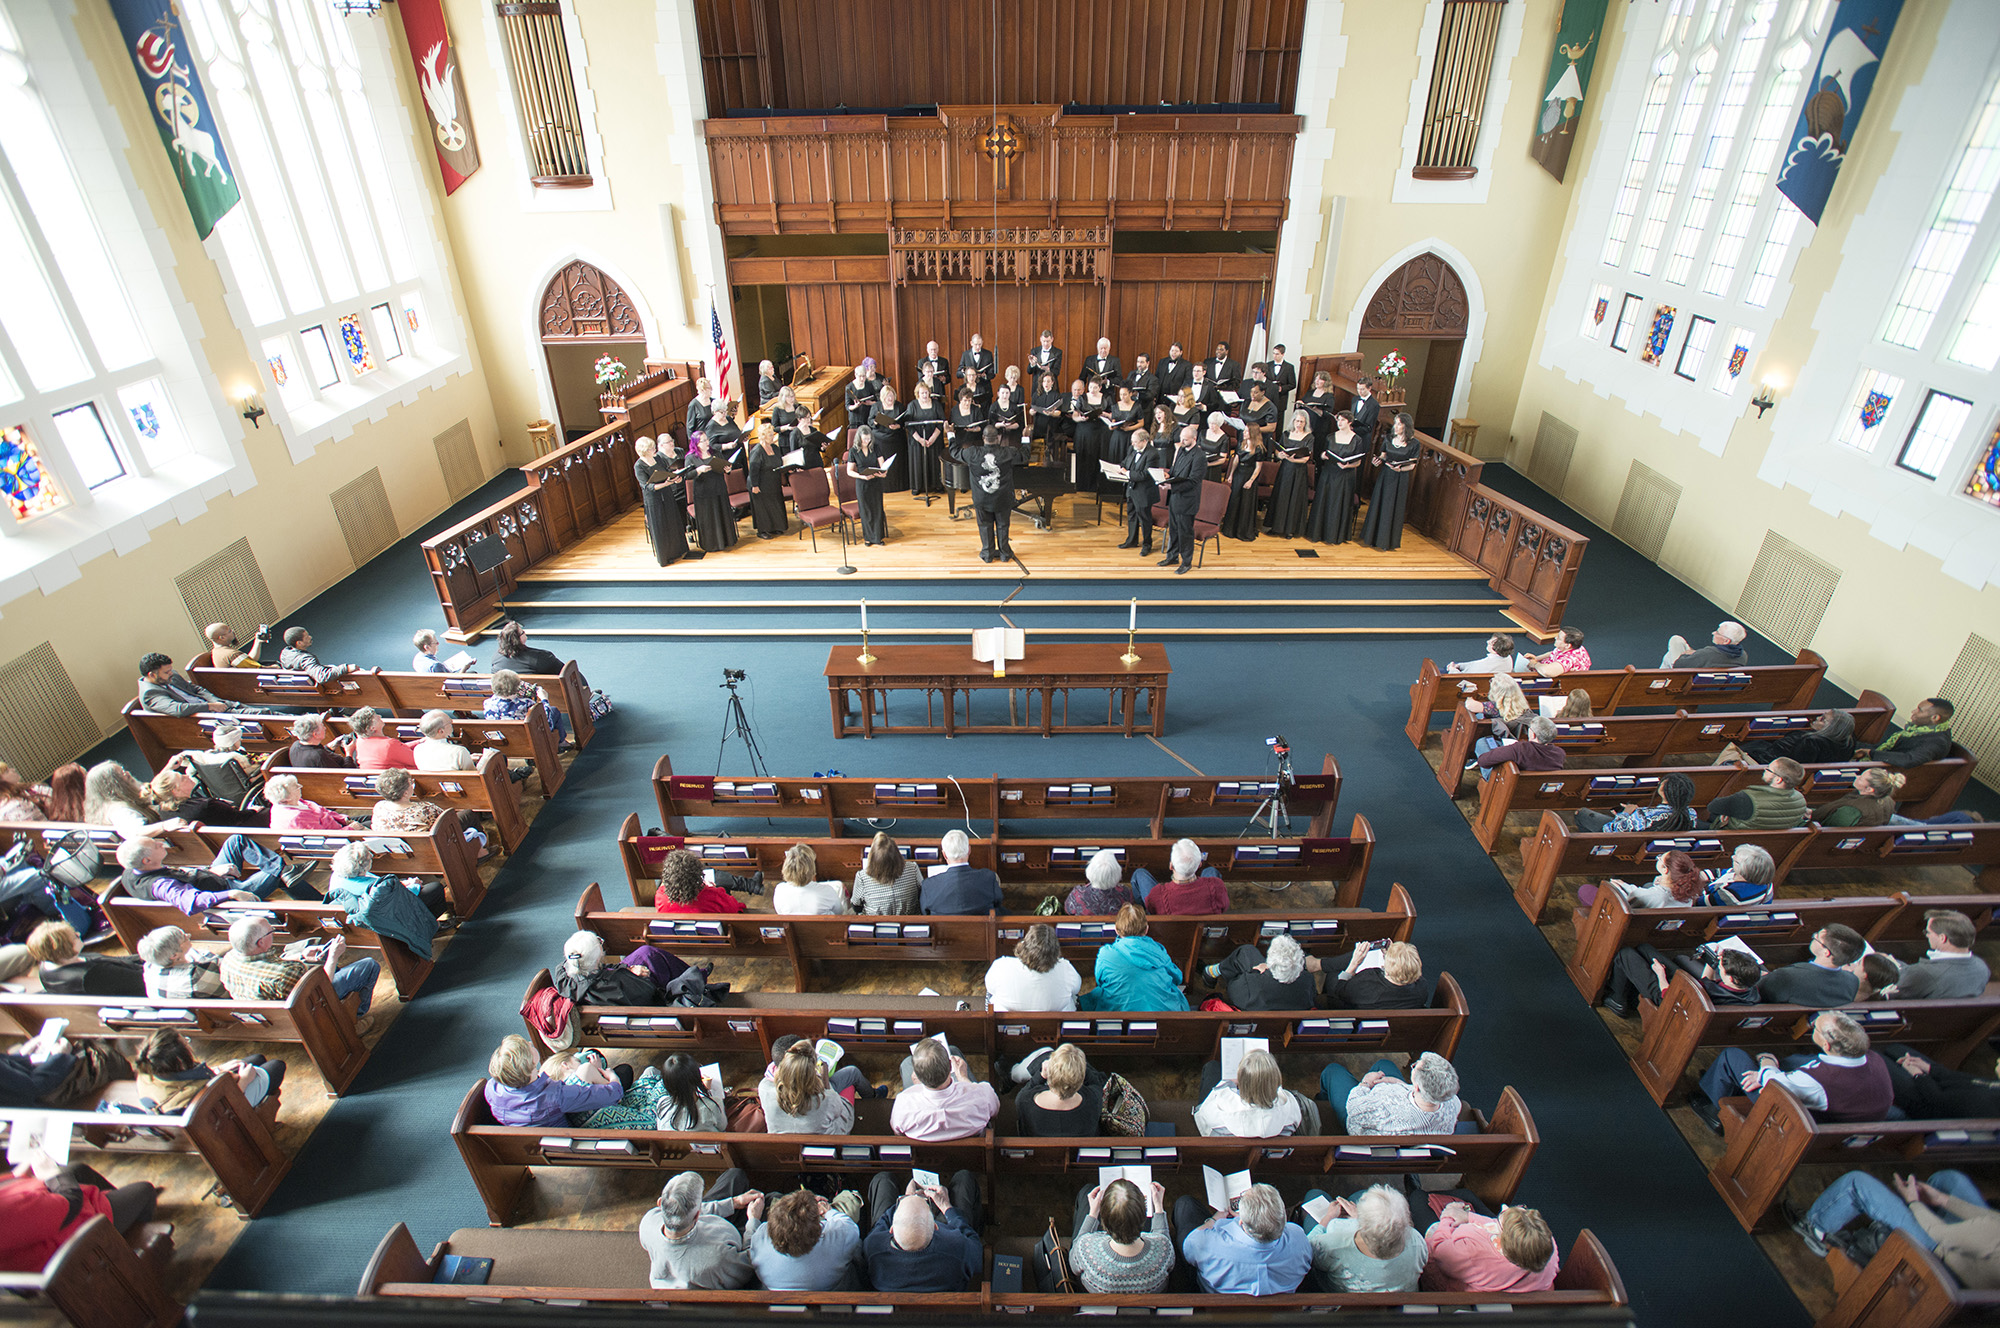 KCC choir members perform at First Presbyterian Church in downtown Battle Creek.